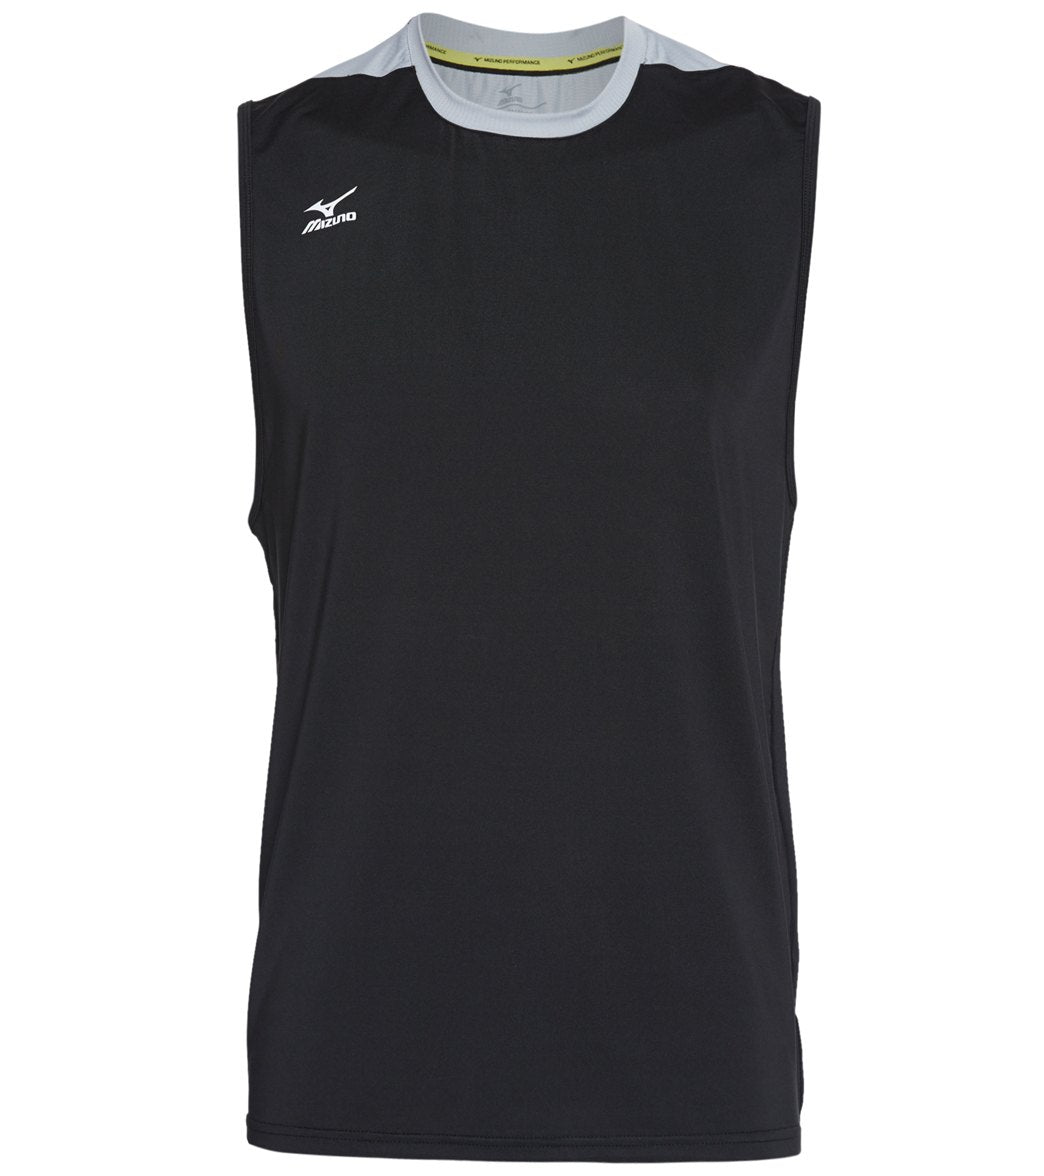 Mizuno Men's Cutoff Volleyball Jersey Shirt - Black/Silver Medium Polyester/Spandex - Swimoutlet.com